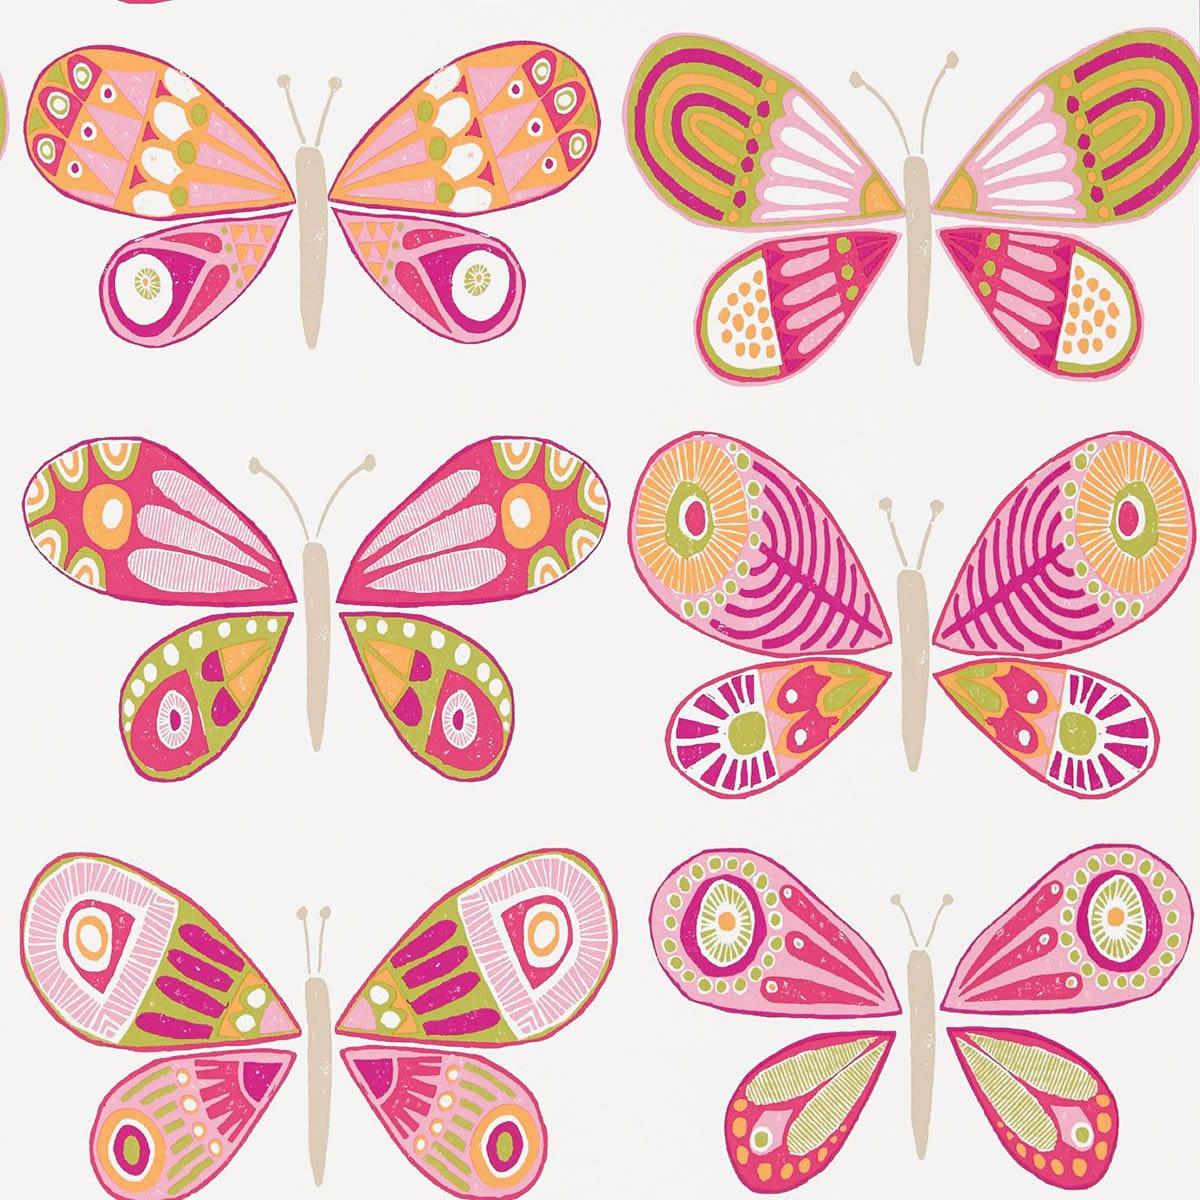 Carta da parati Scion Madame Butterfly - Brand_Scion, Fantasia_Fantasia - Carte da parati junior - Scion